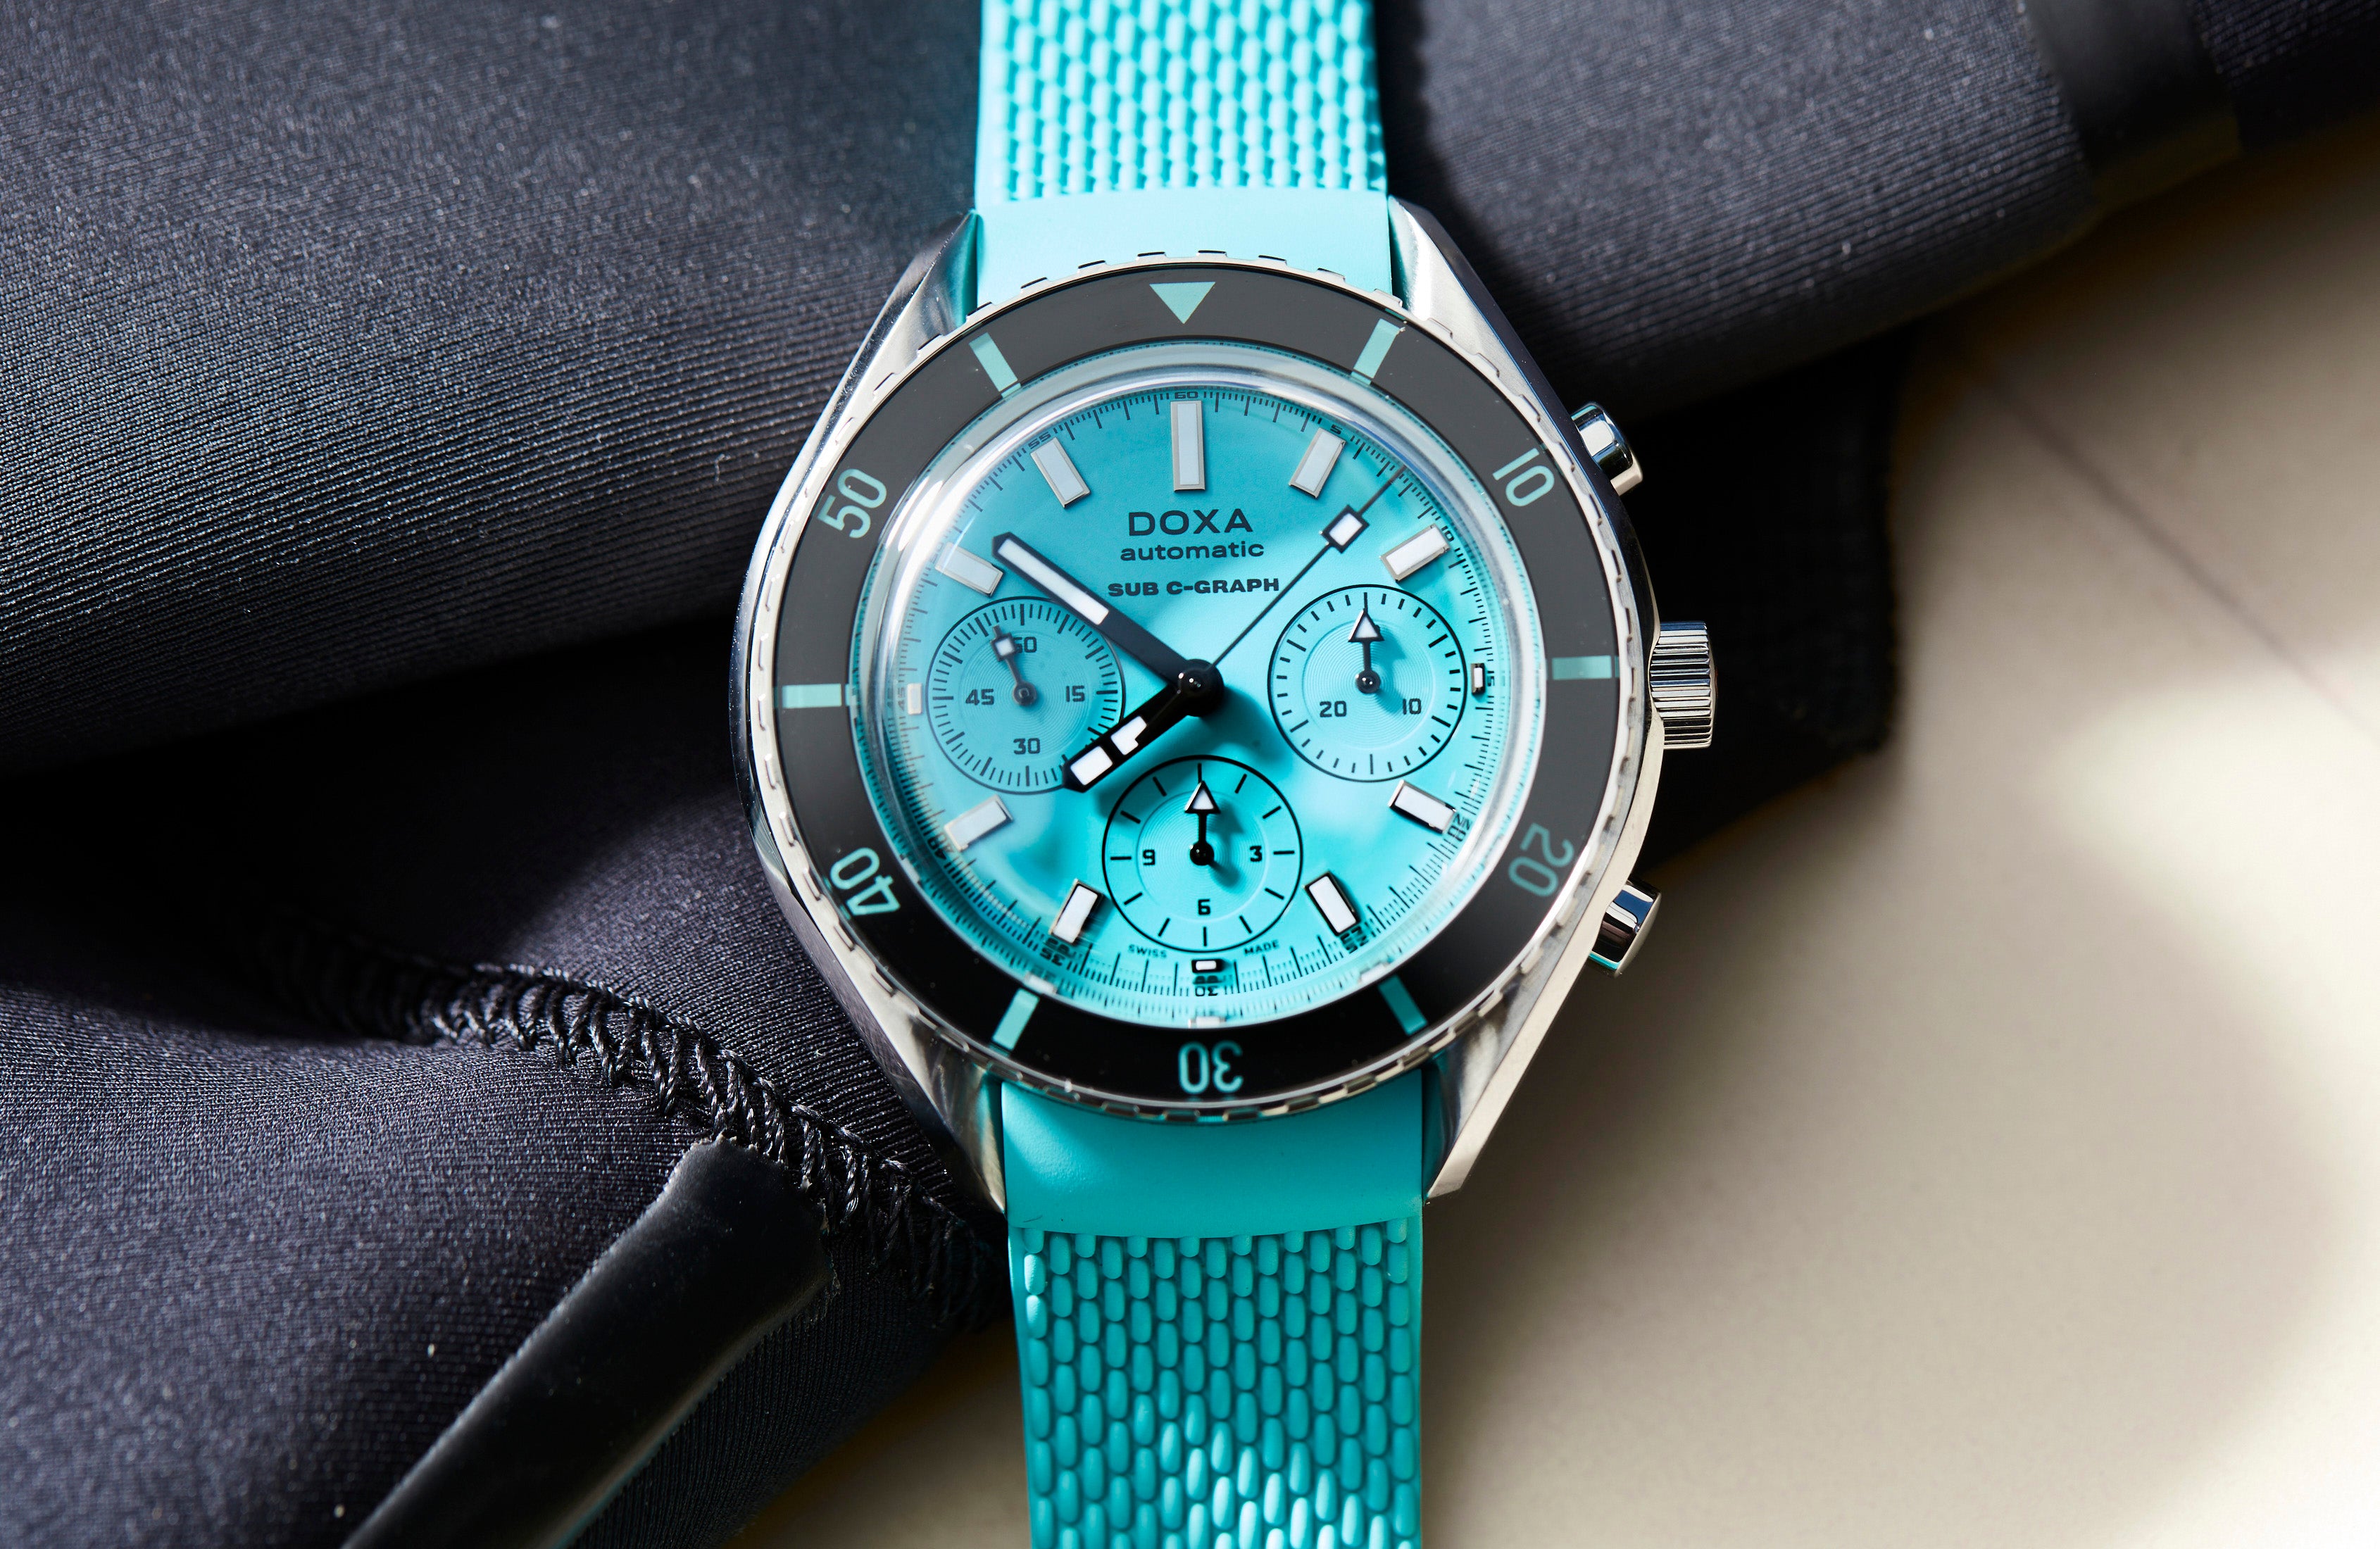 – DOXA SUB C-GRAPH 200 US Watches